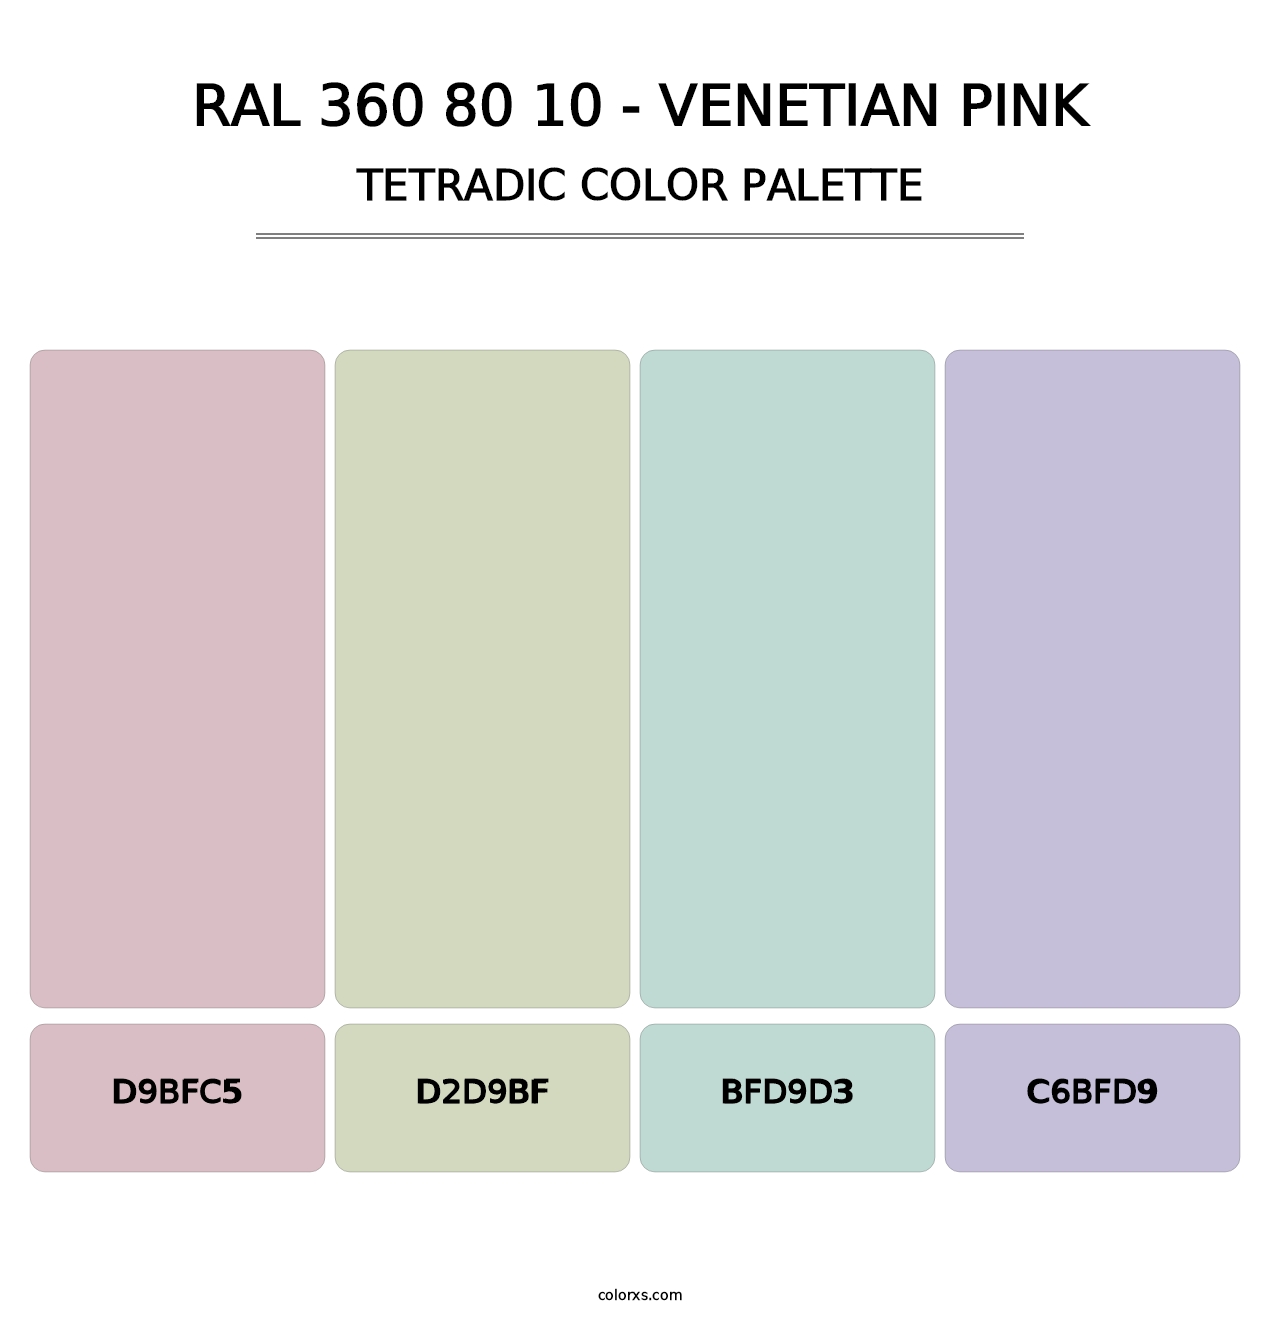 RAL 360 80 10 - Venetian Pink - Tetradic Color Palette